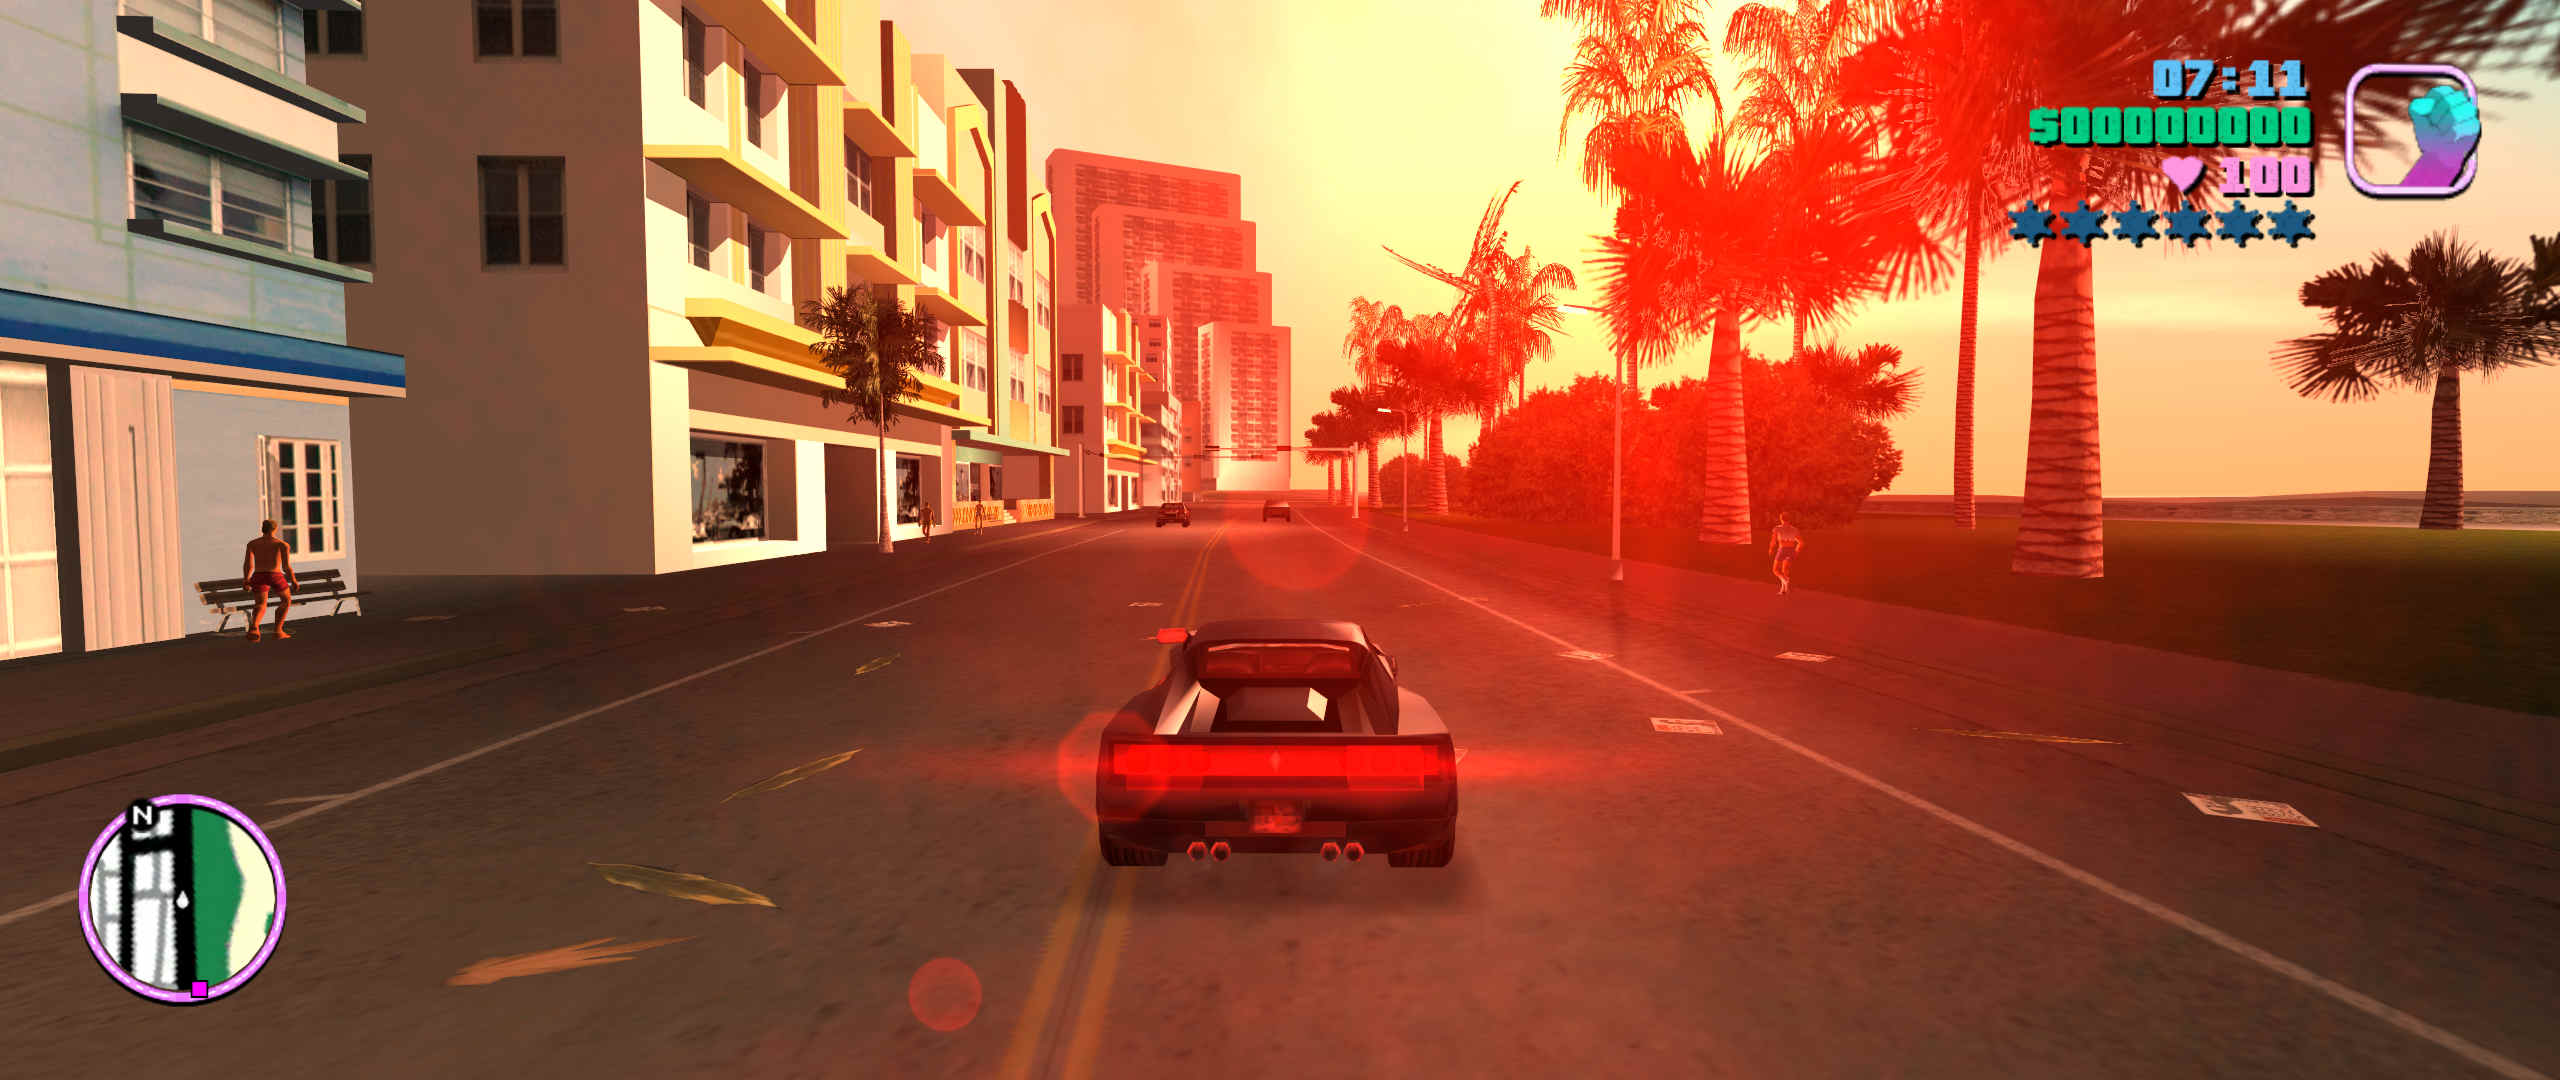 Grand Theft Auto: Vice City wunderschön erneuert als reVC